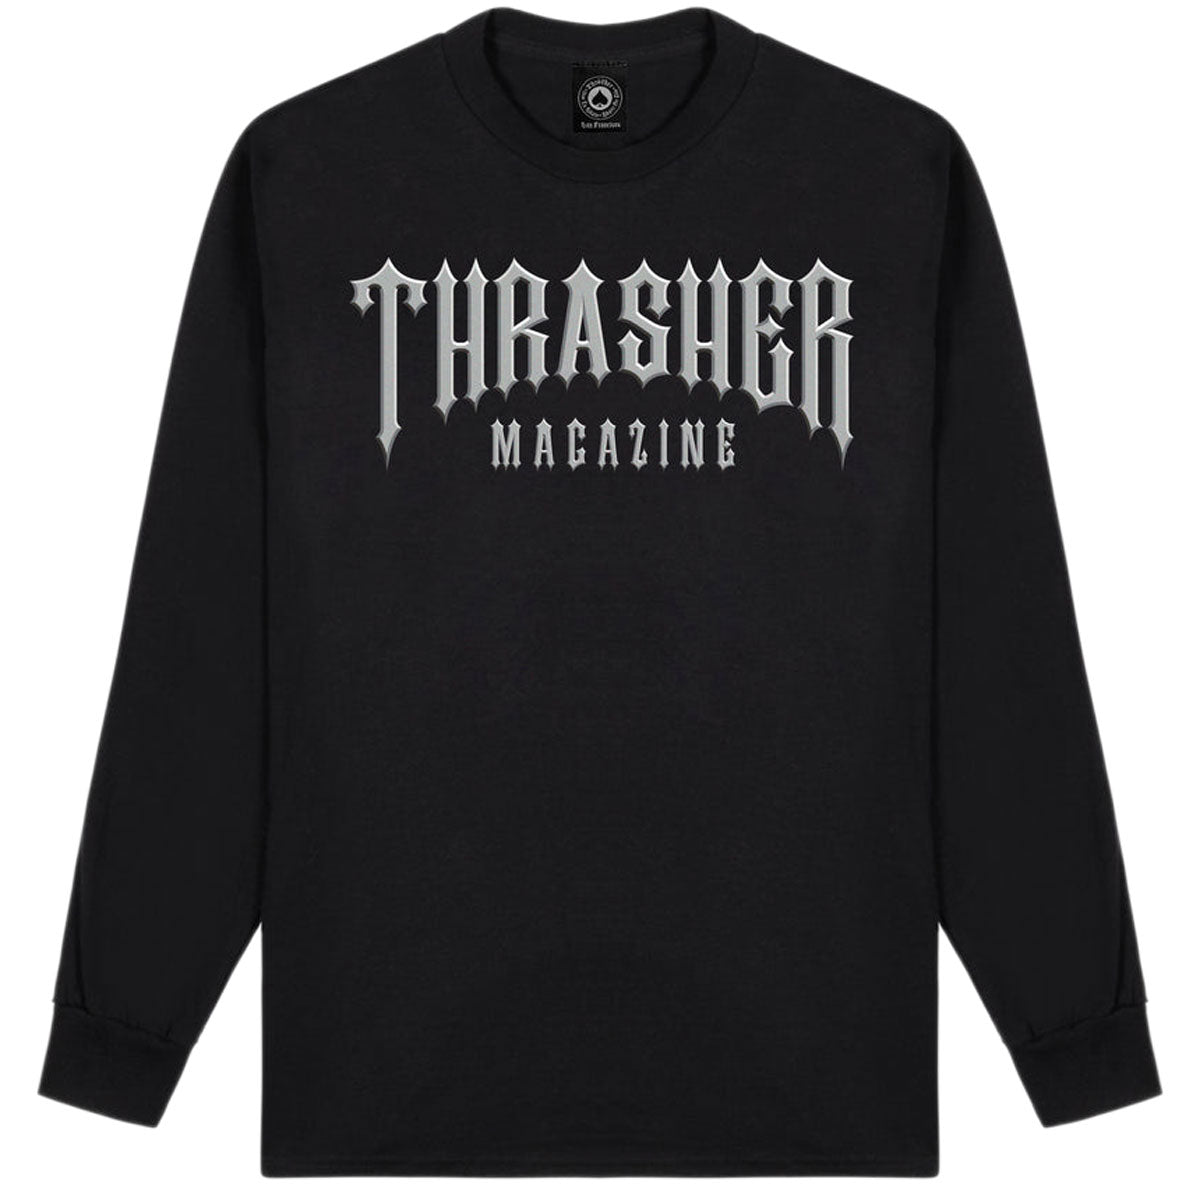 Thrasher Low Low Long Sleeve T-Shirt - Black image 1